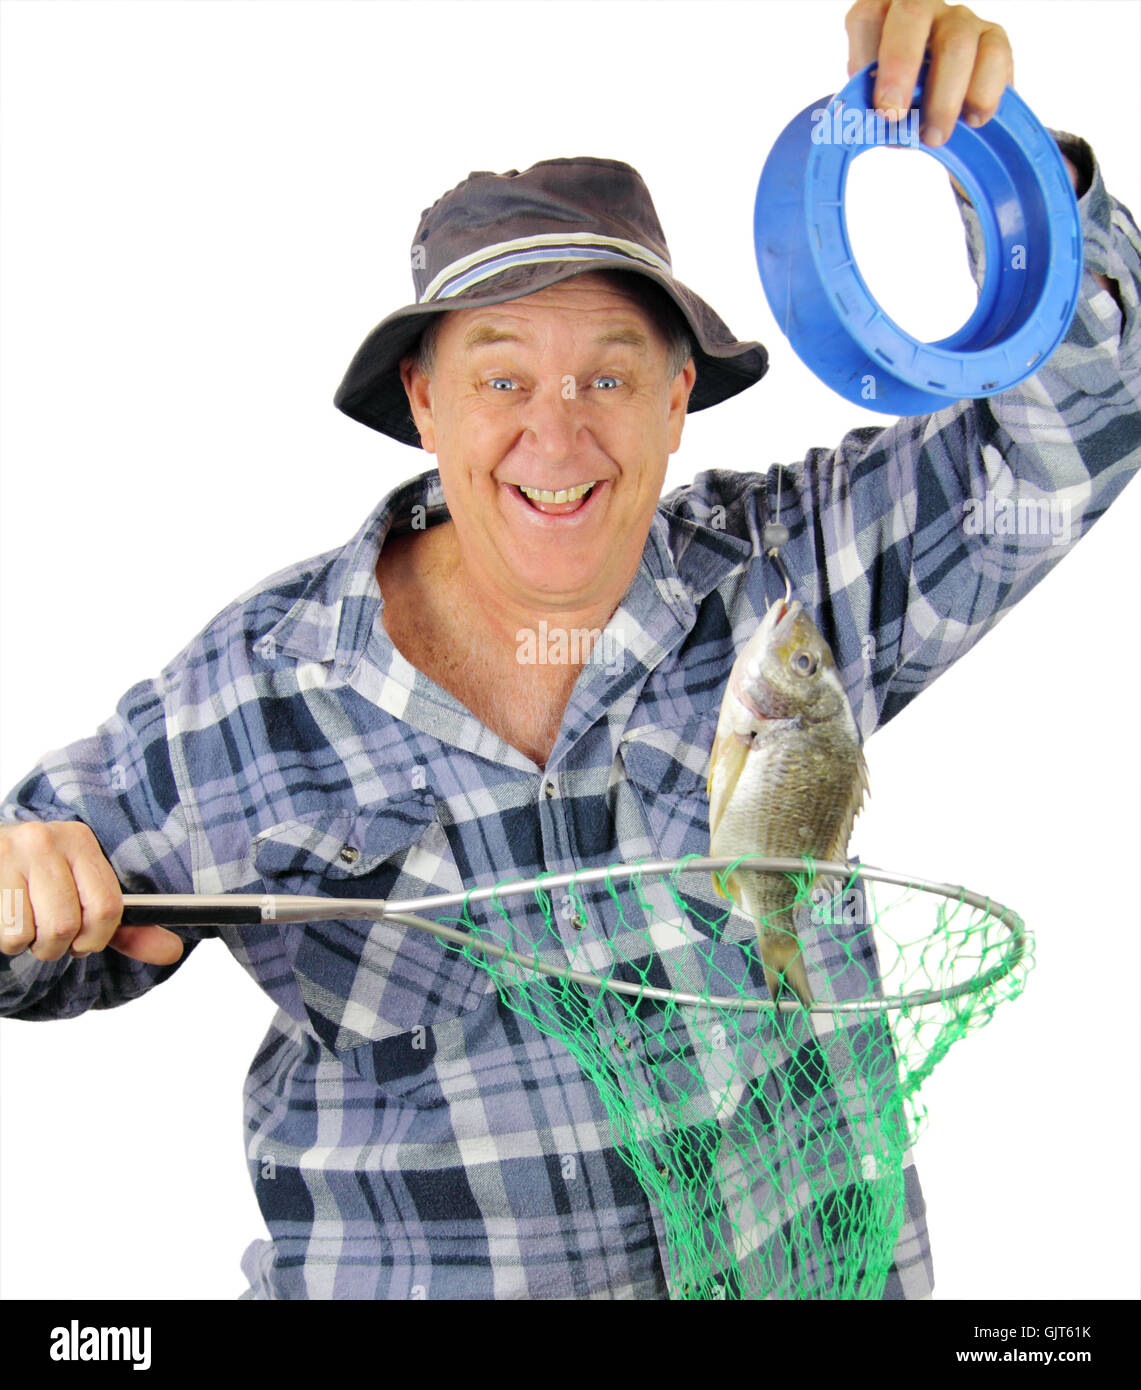 angle fish fishing Stock Photo